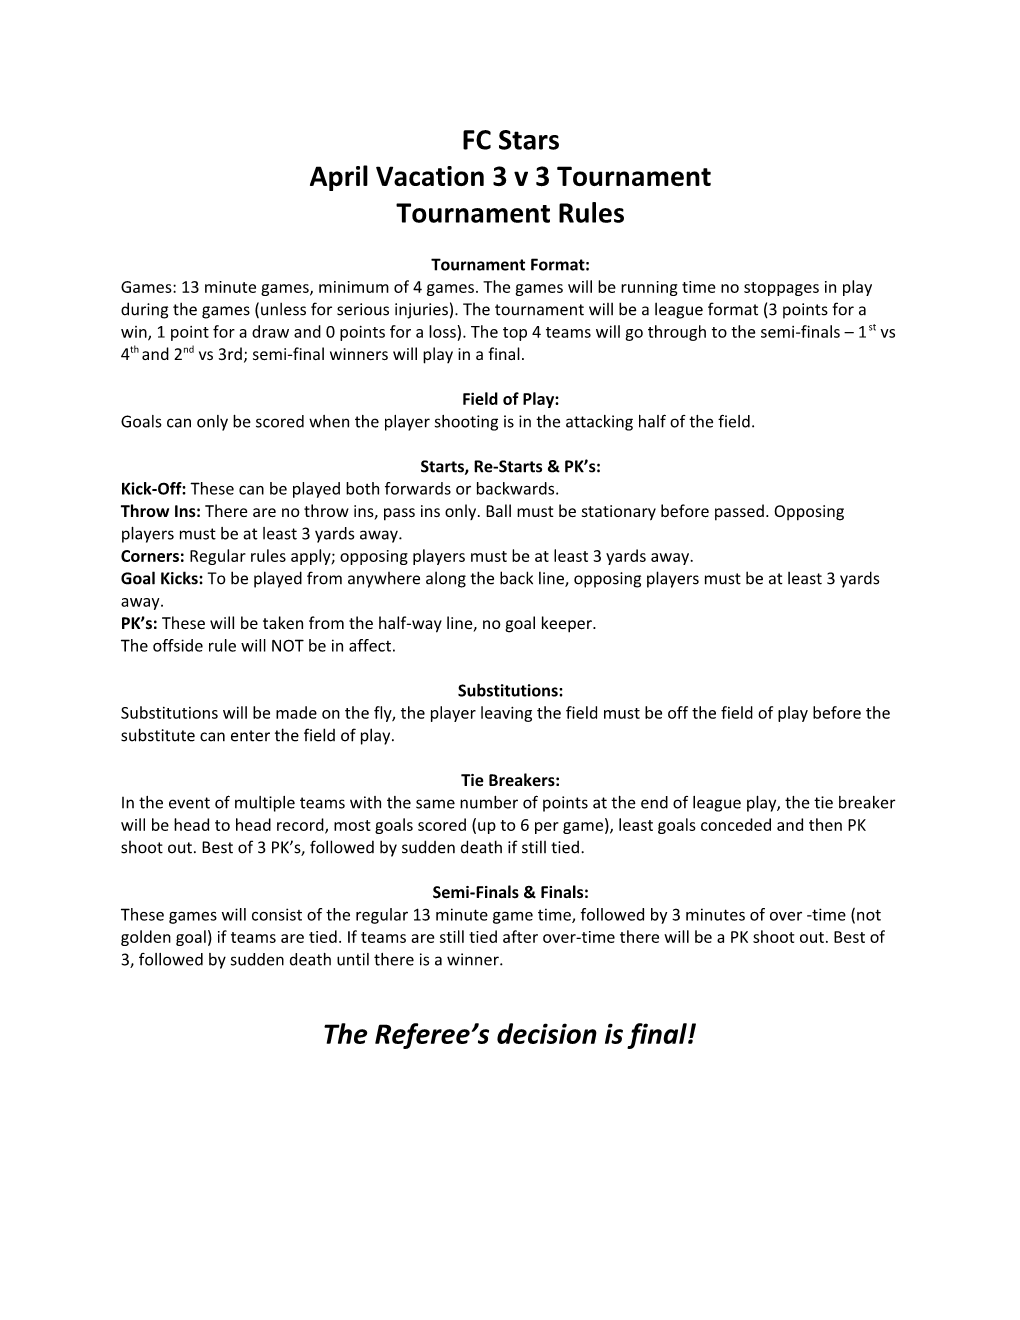 April Vacation 3 V 3 Tournament